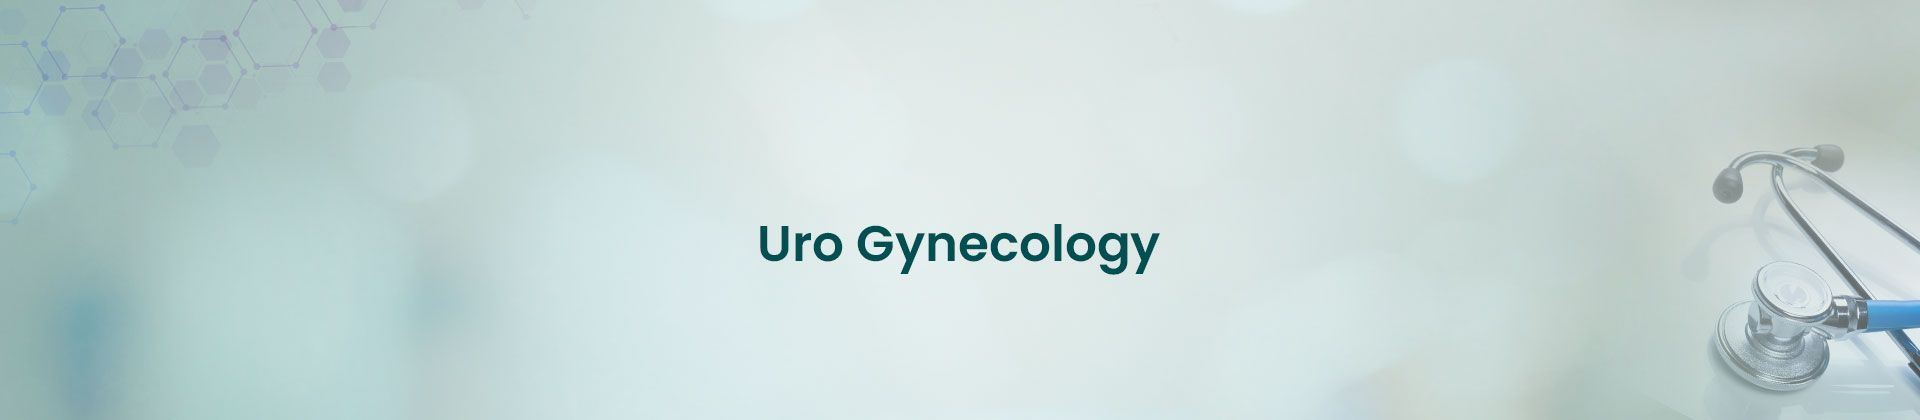 Uro Gynecology